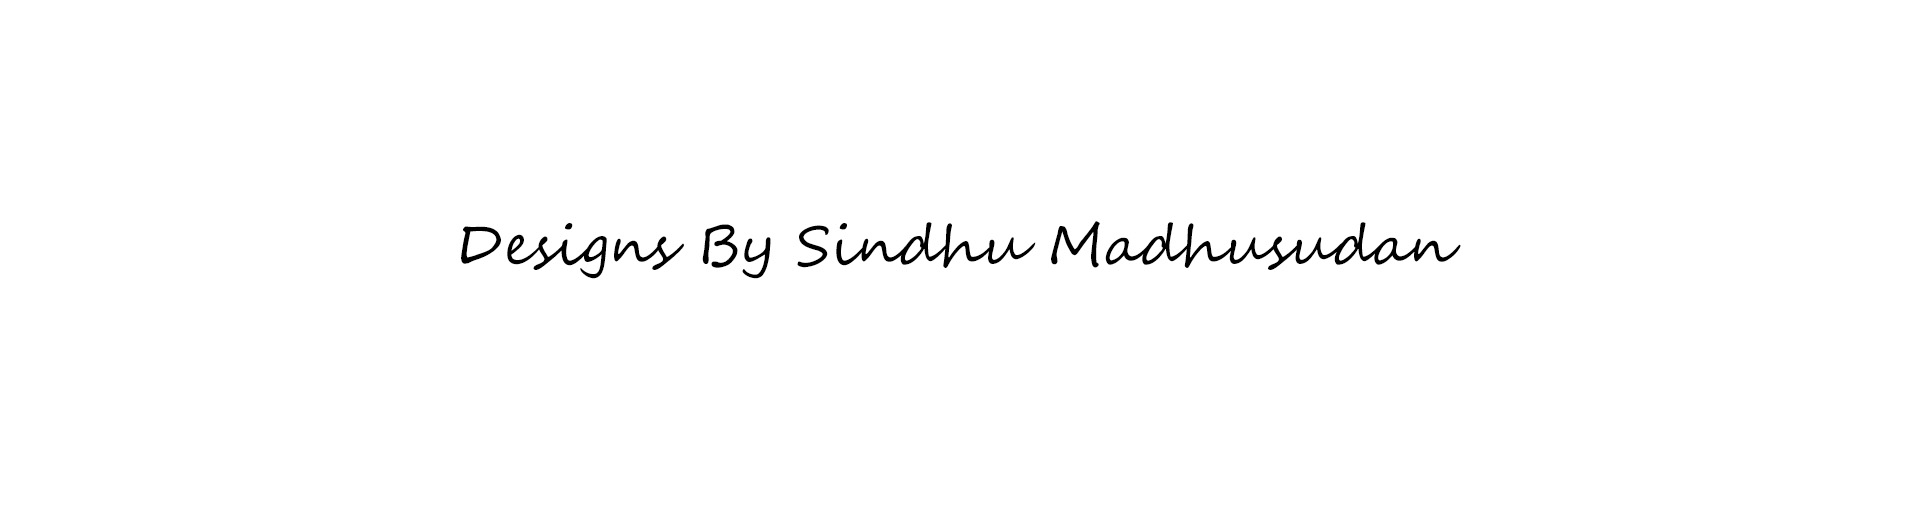 Sindhu Madhusudan